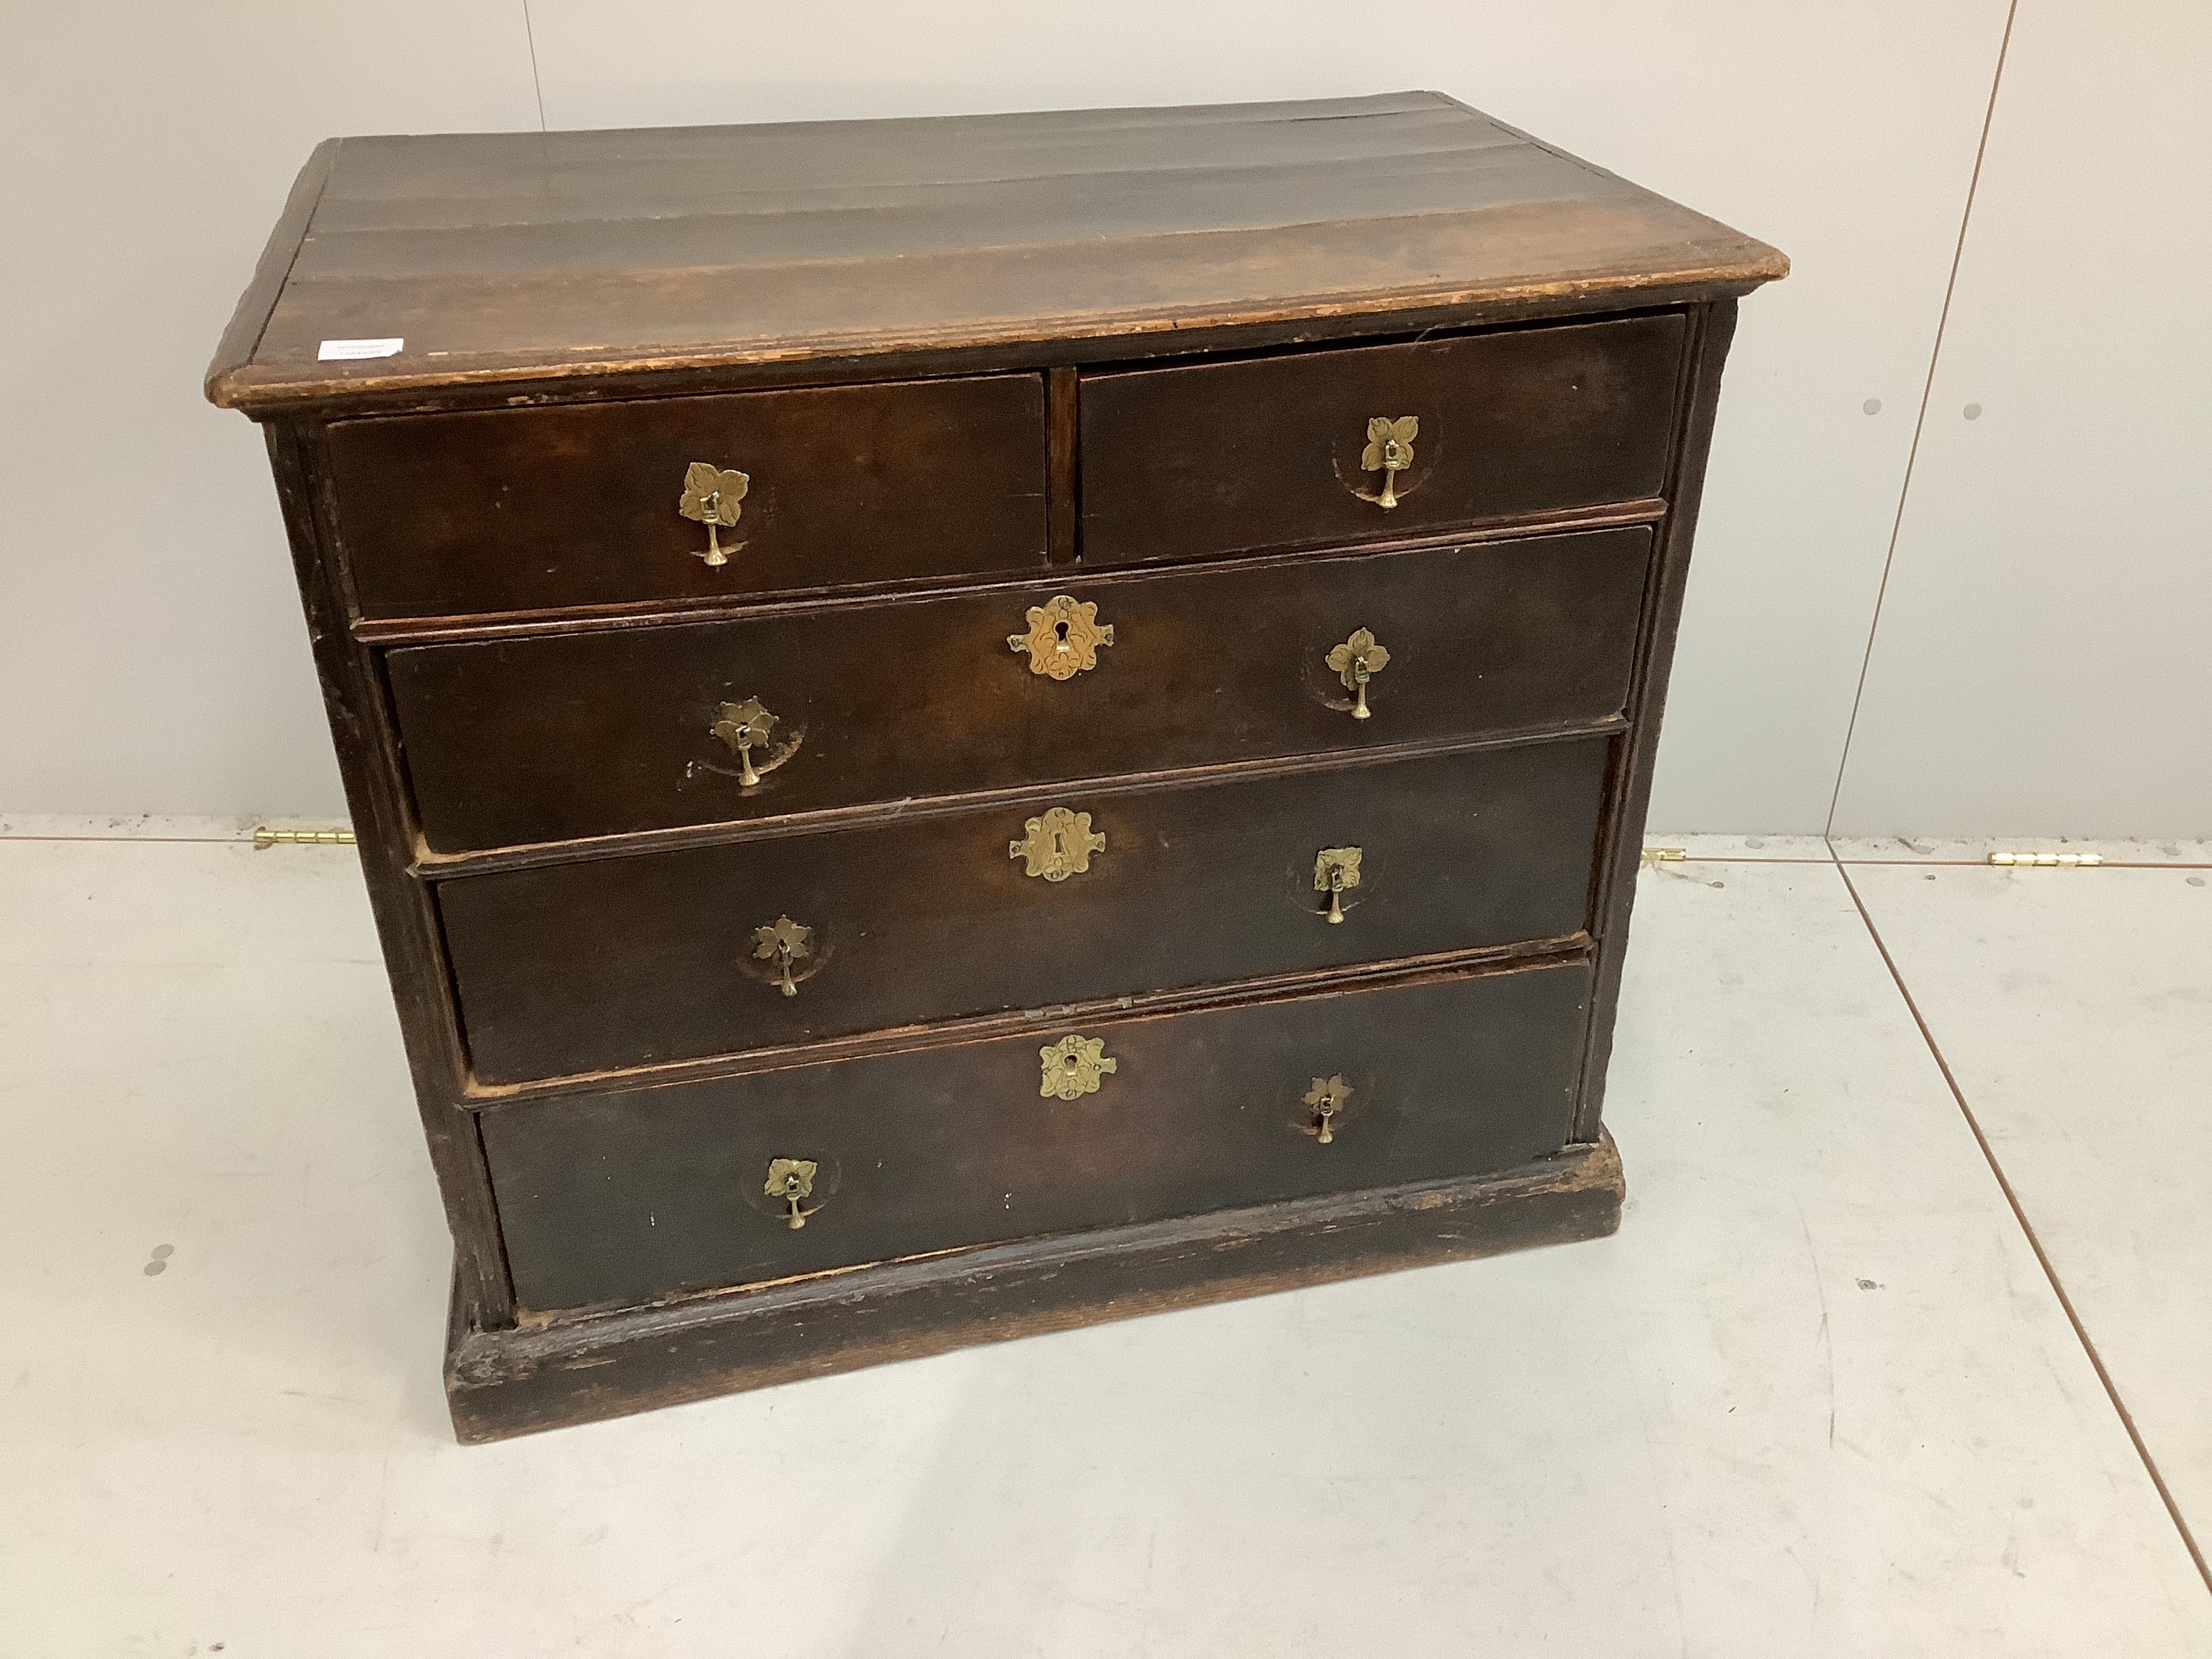 An 18th century oak five drawer chest, width 88cm, depth 54cm, height 76cm